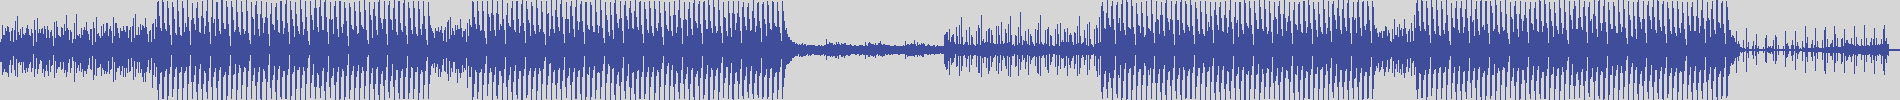 nf_boyz_records [NFY068] Blue Verhanda - Orcadi [Pacific Mix] audio wave form